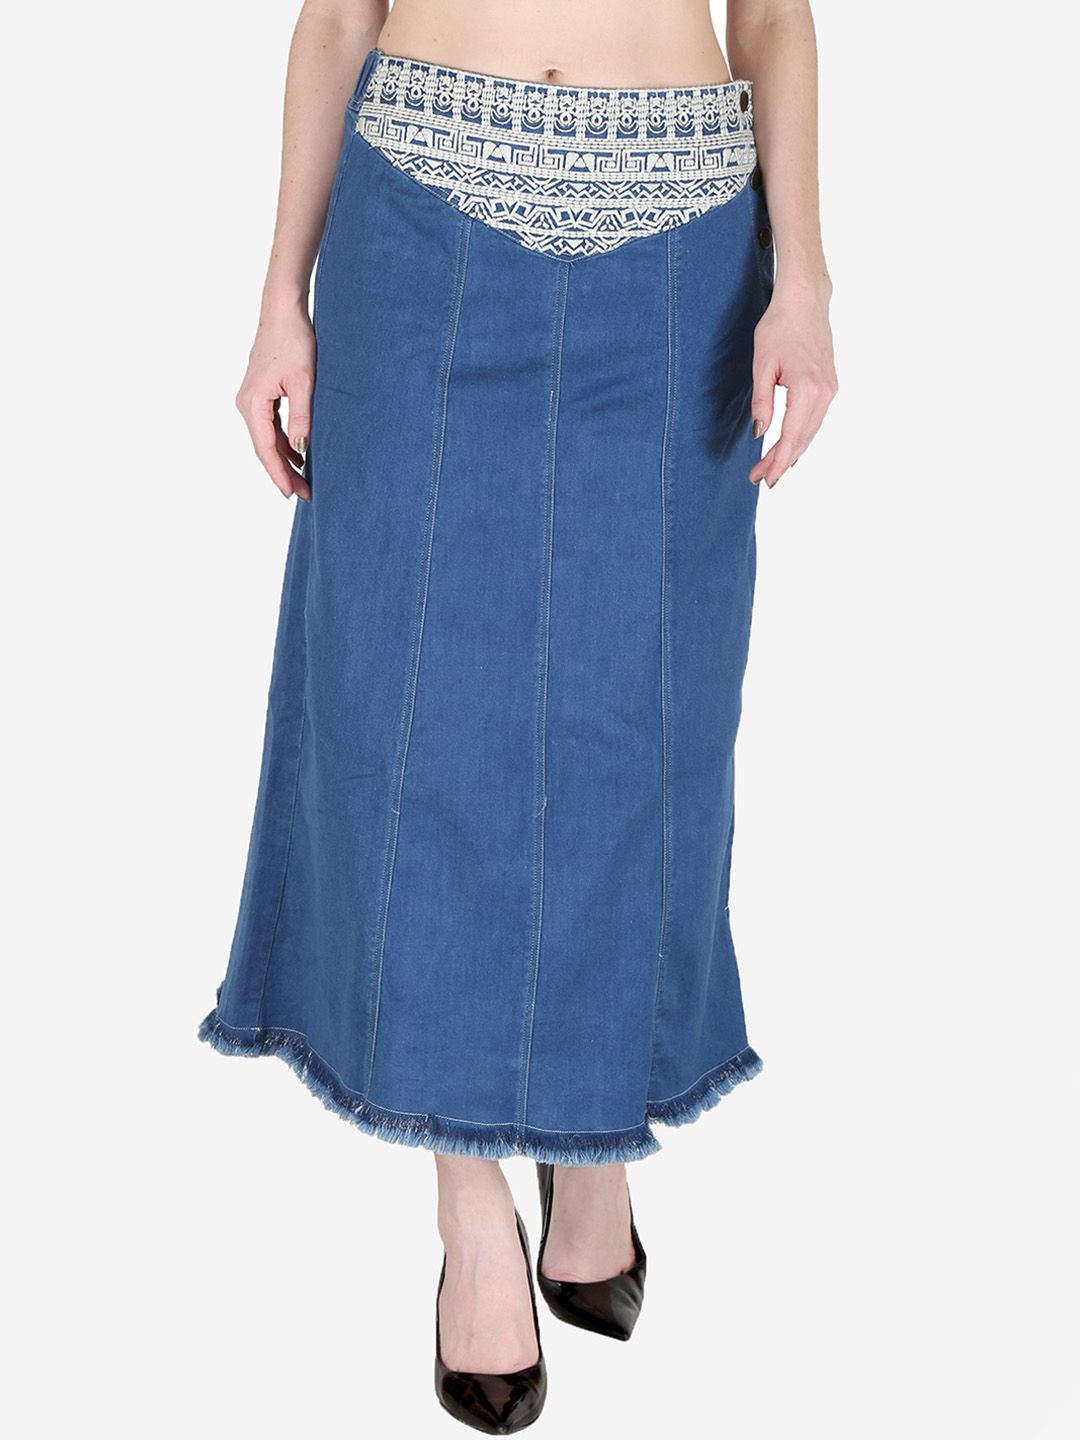 SUMAVI-FASHION Denim Front Embroidered Maxi Skirt Price in India